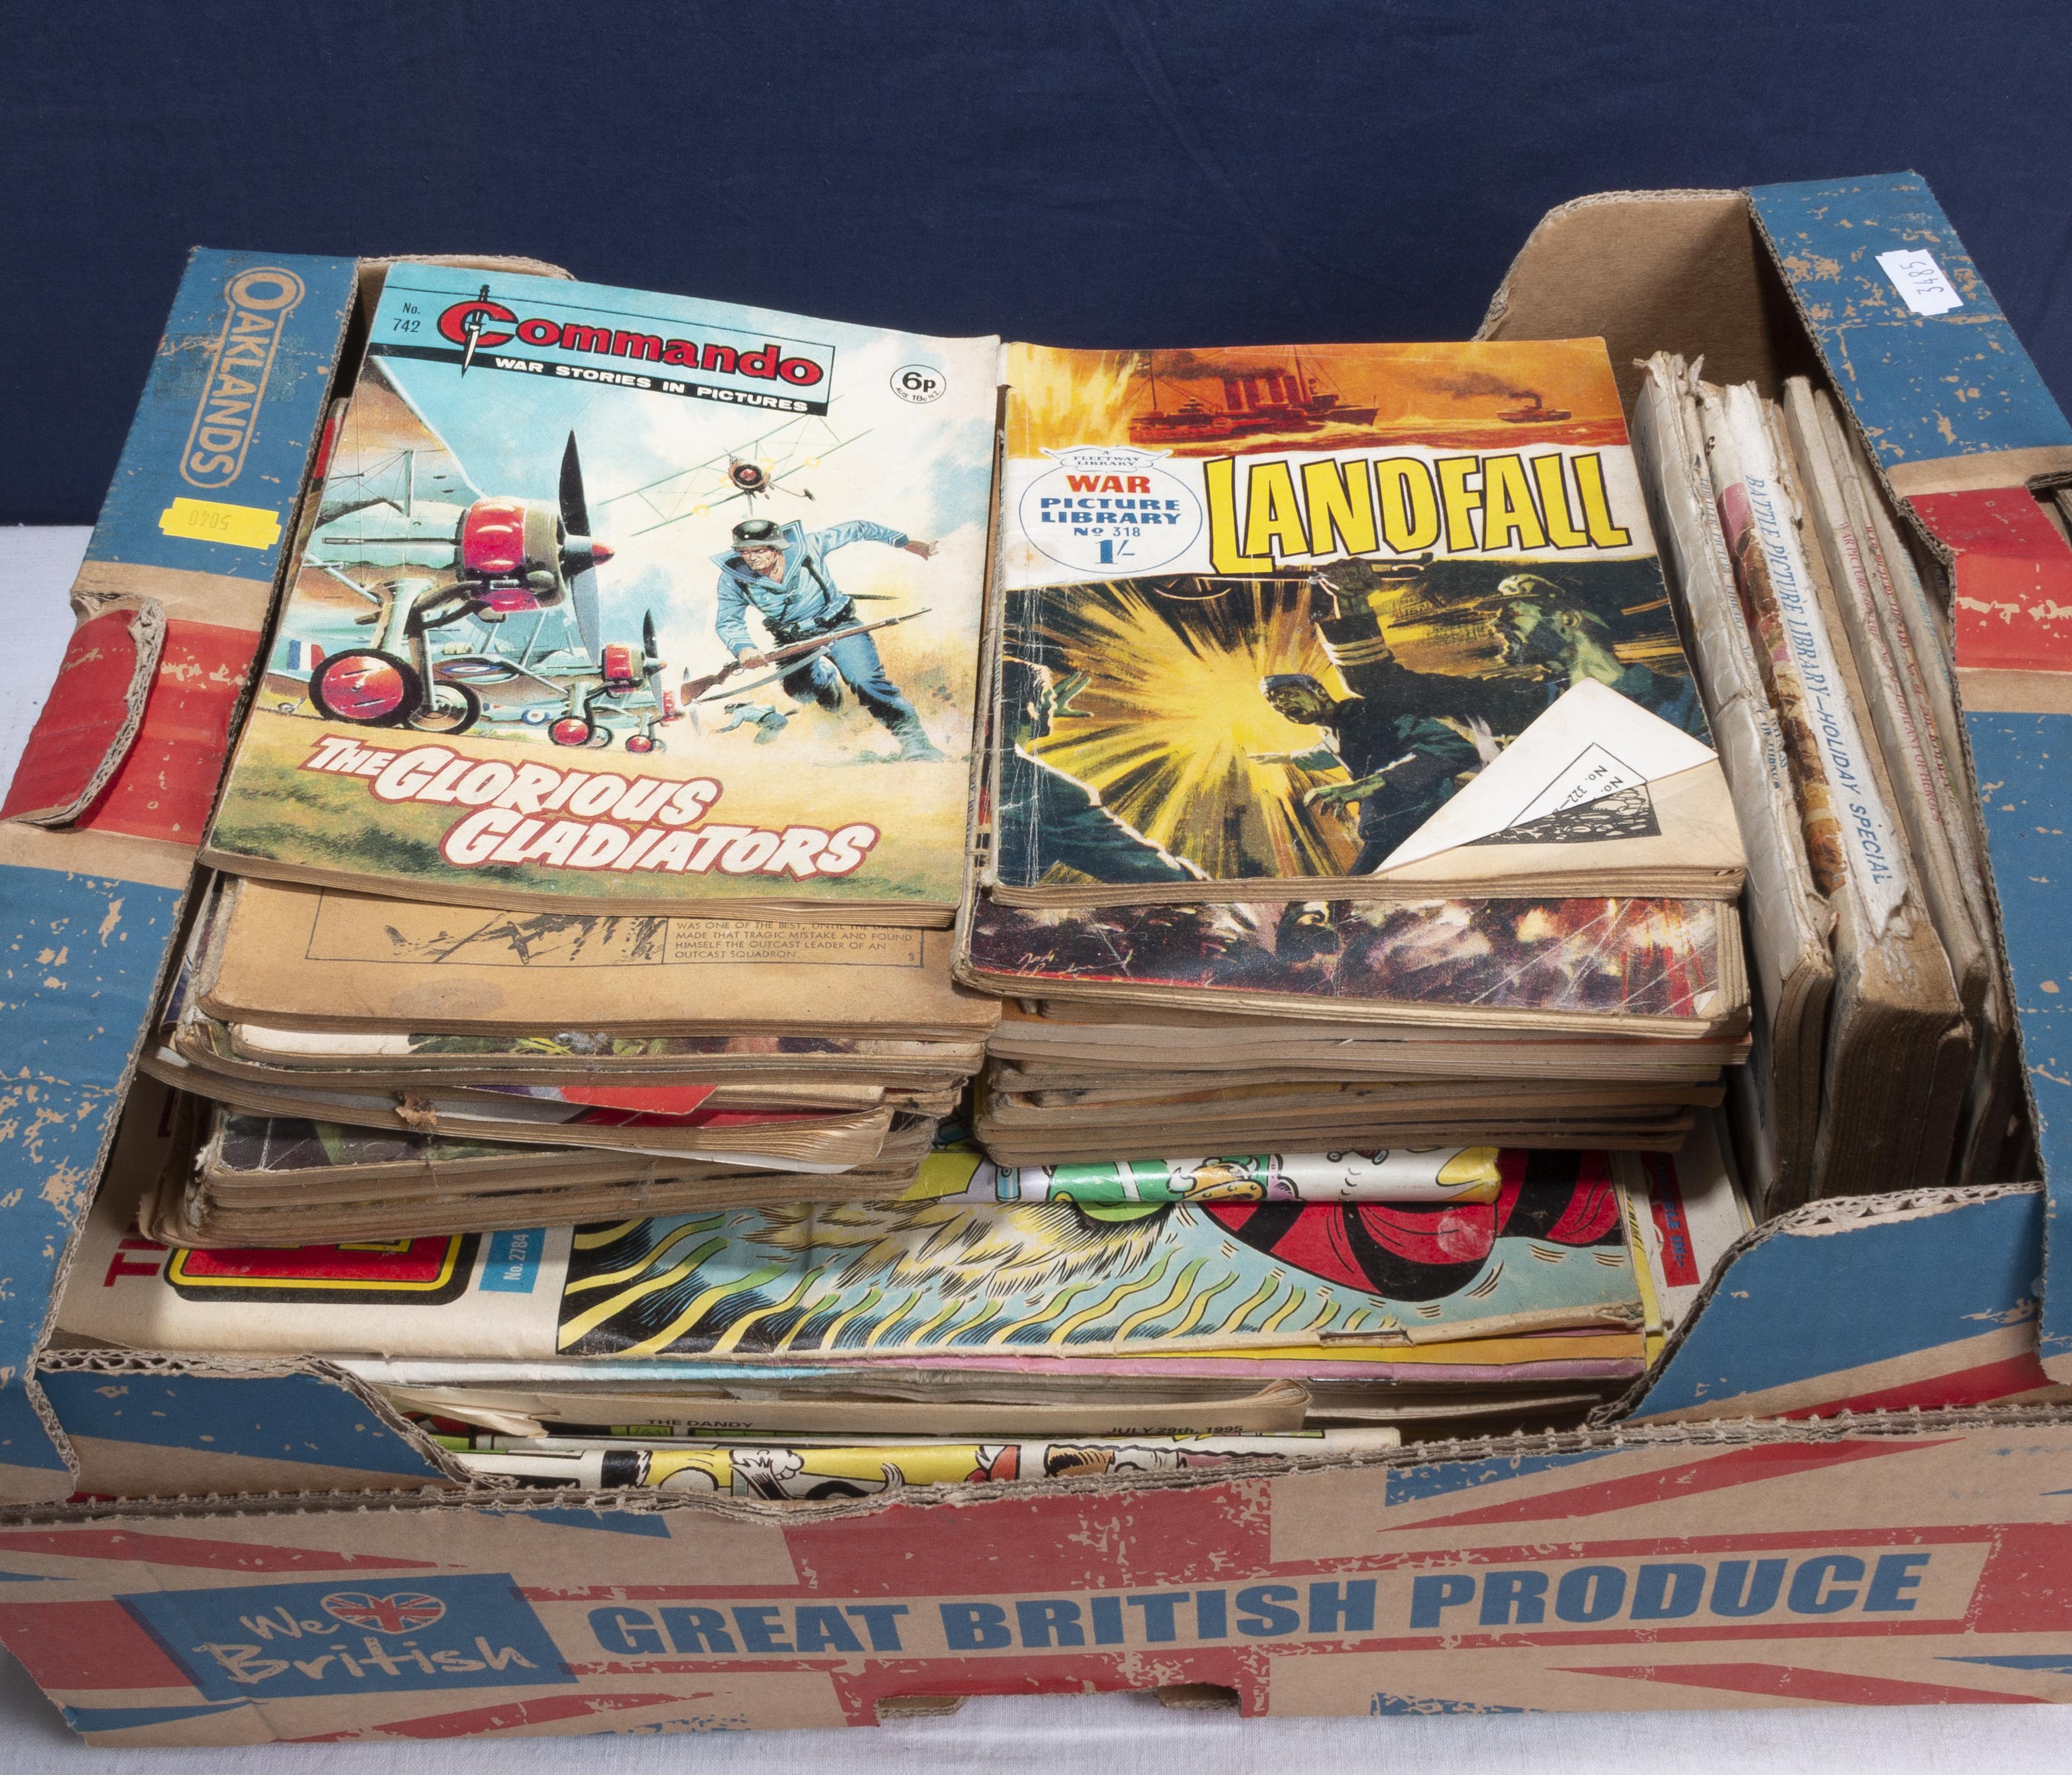 A box of vintage comic books